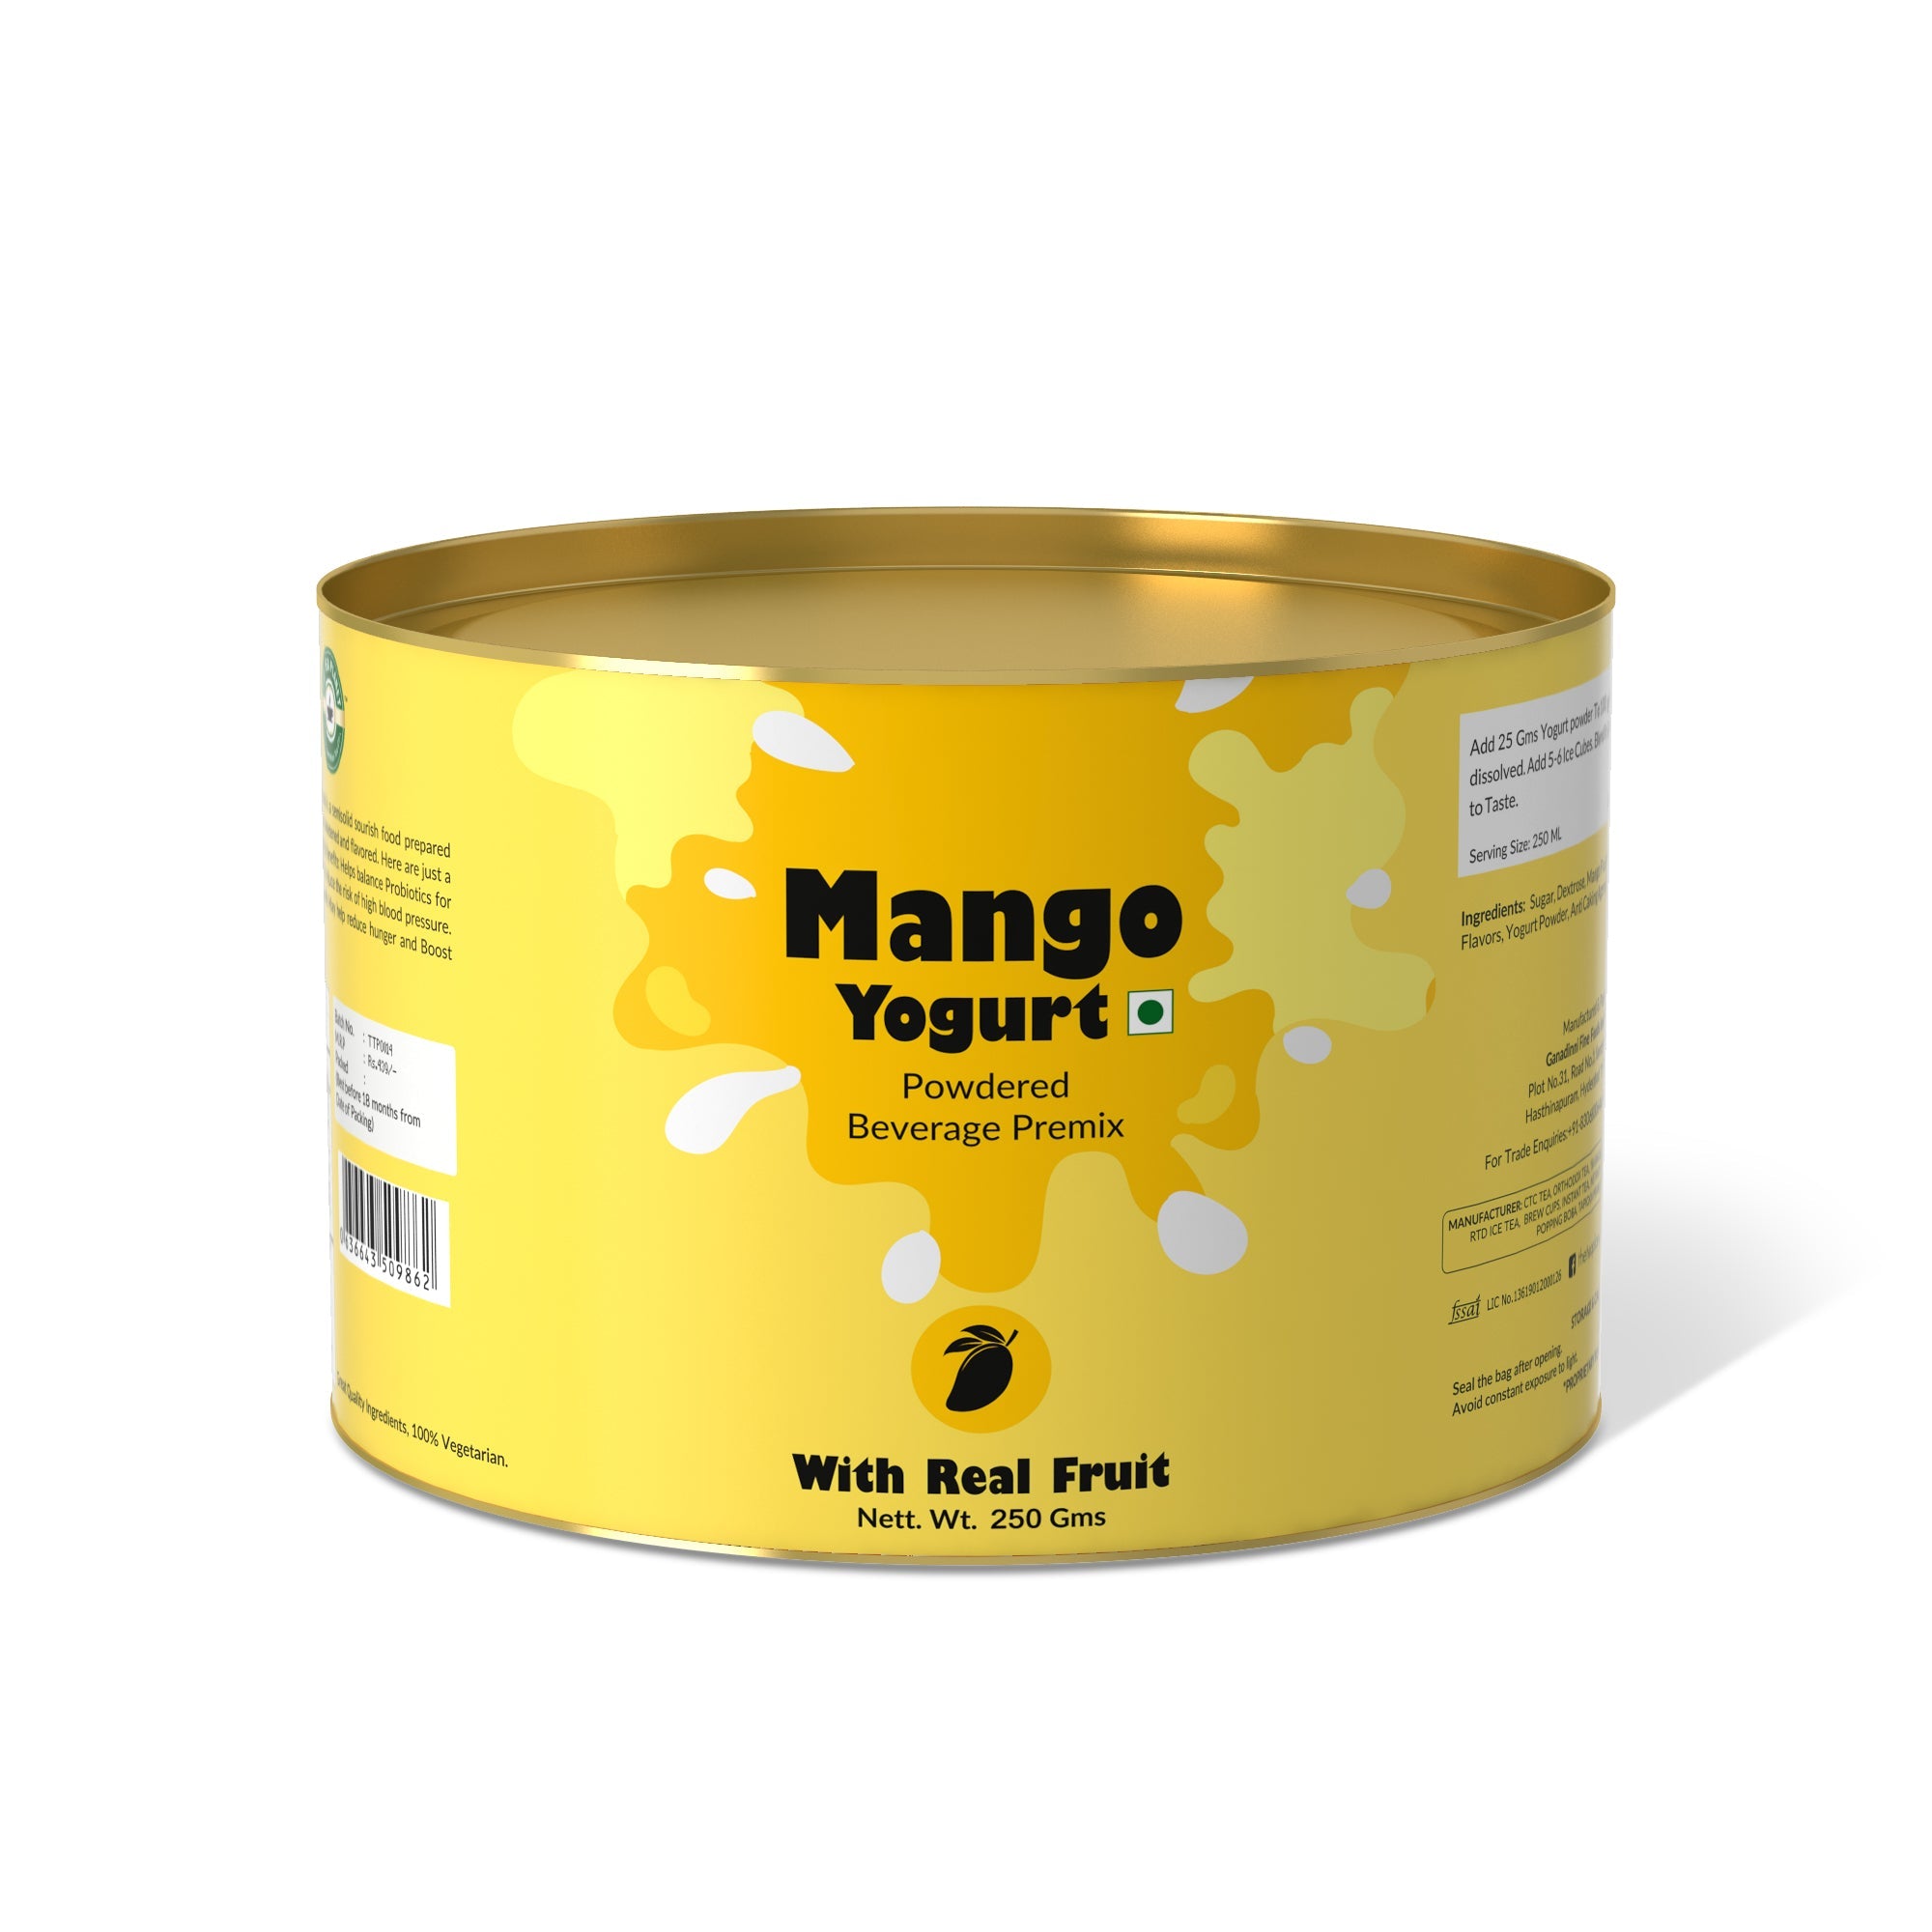 Mango Yogurt Mix - 250 gms